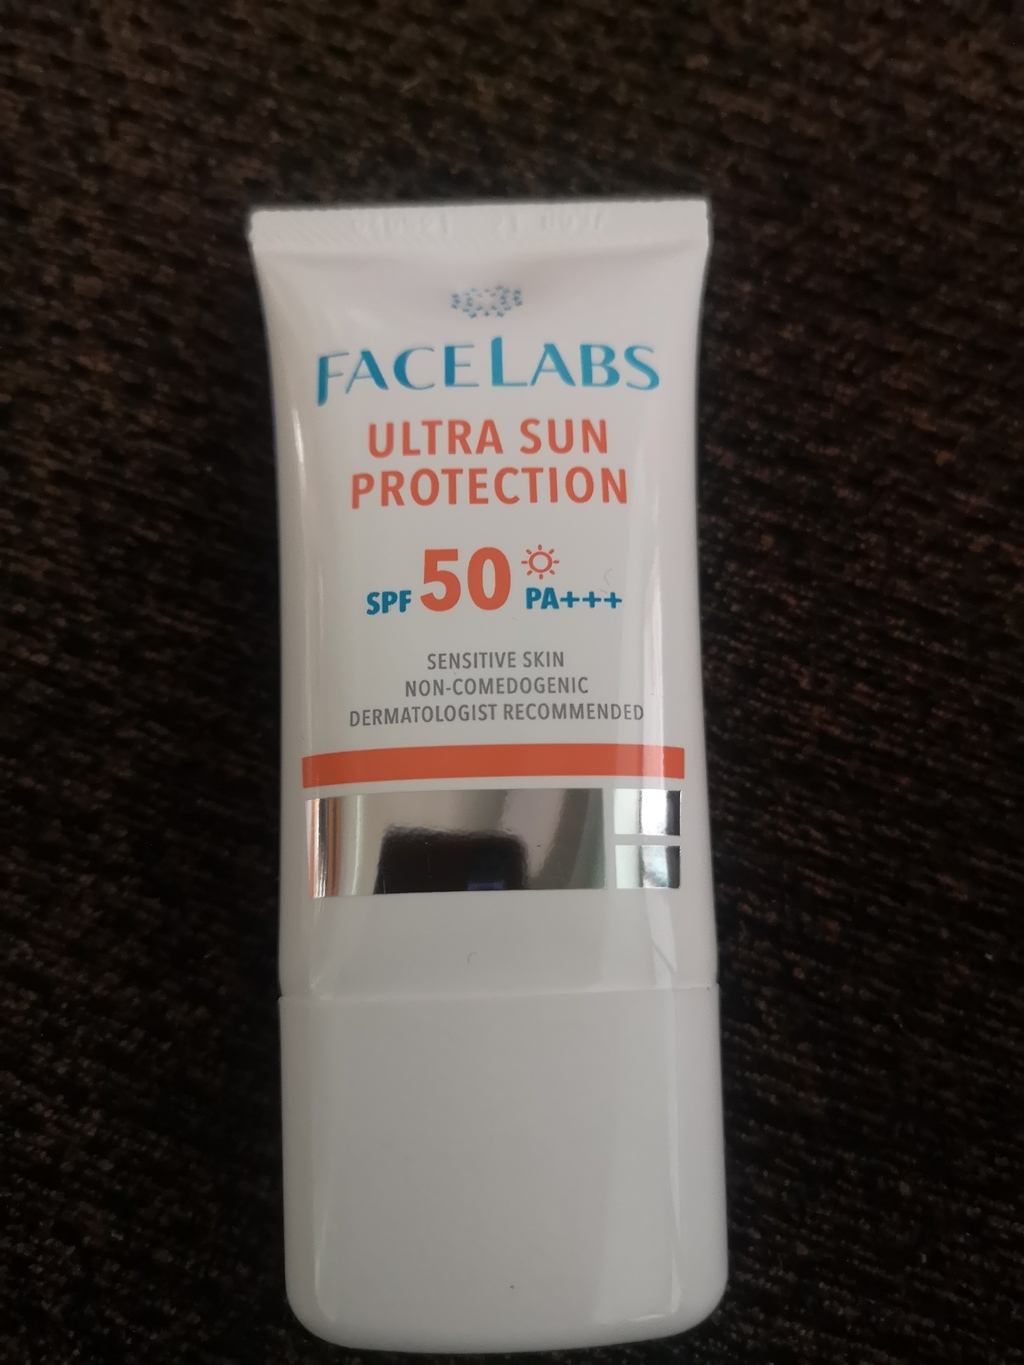 FACELABS Ultra Sun Protection SPF50 PA+++ รีวิว